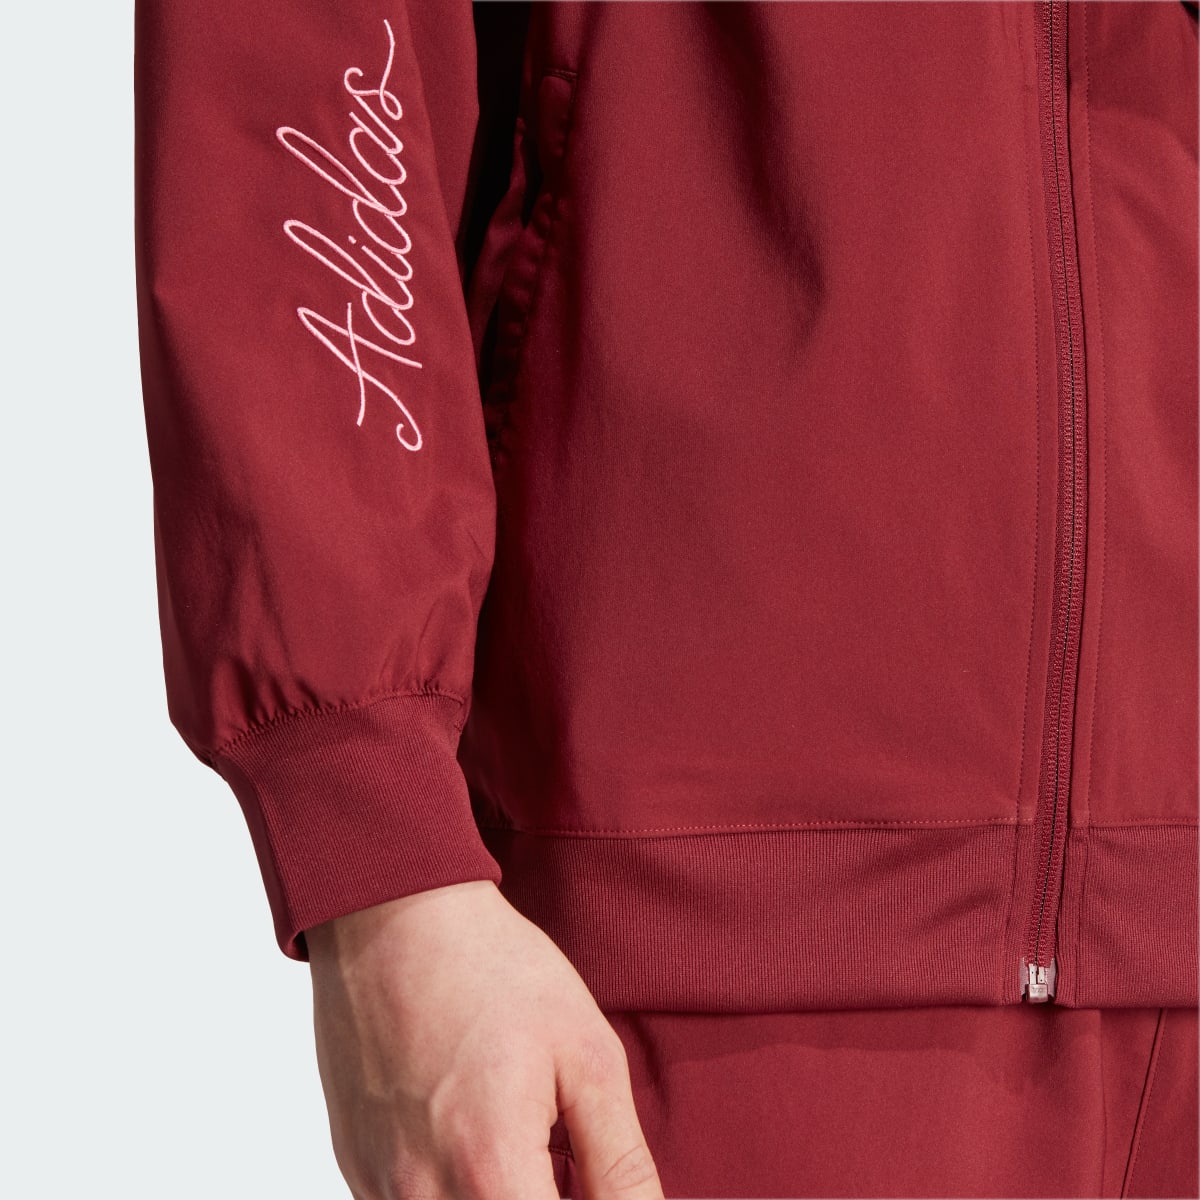 Adidas Scribble Jacket. 7